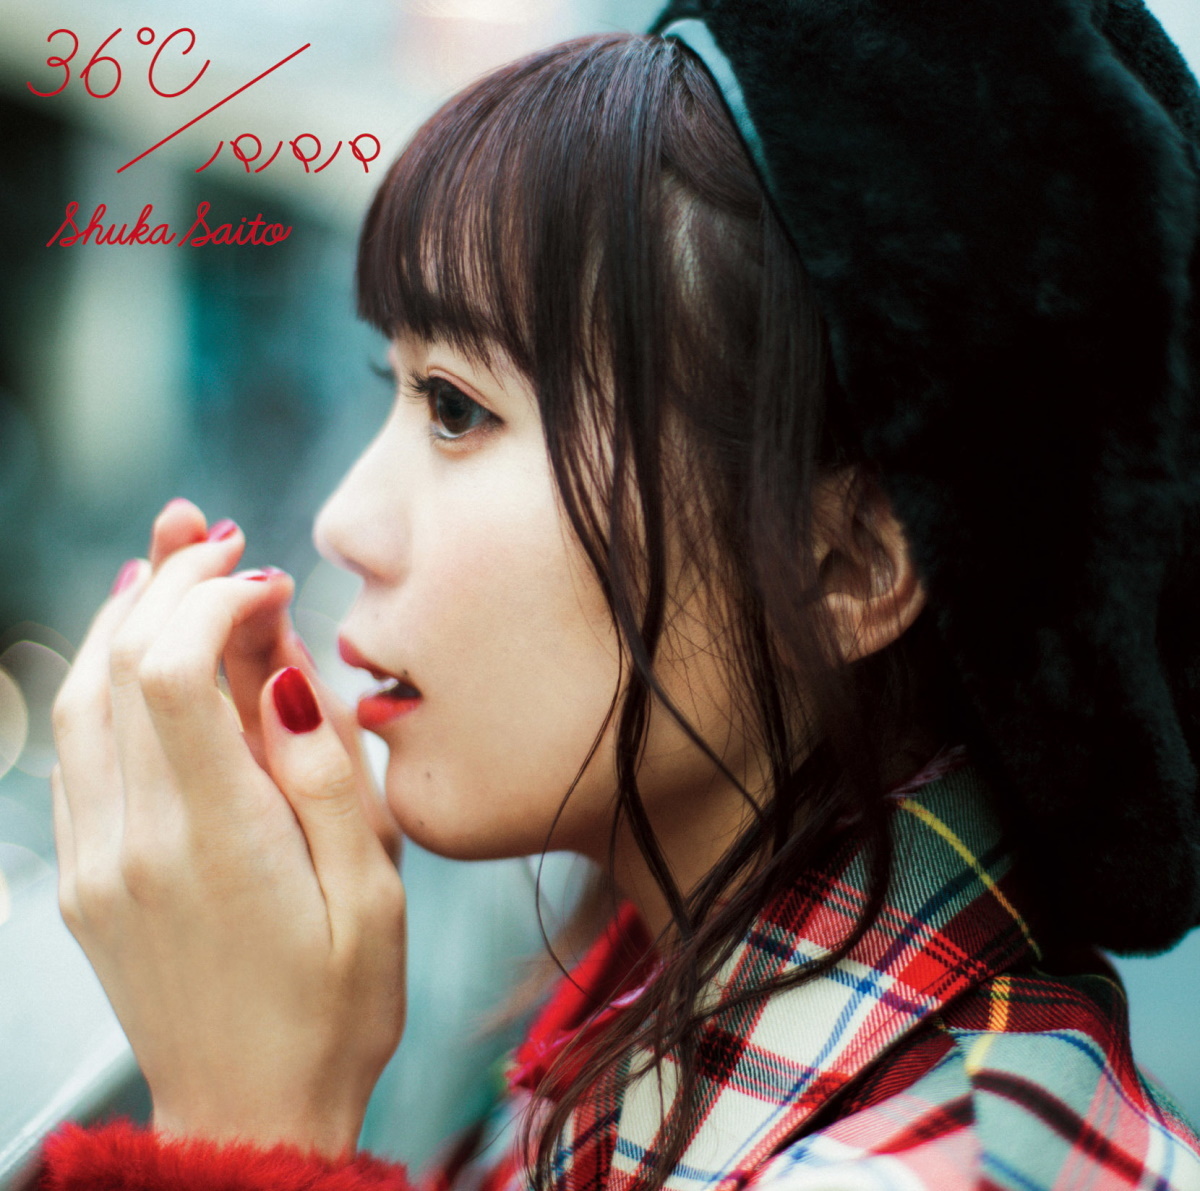 Cover for『Shuka Saito - Papapa』from the release『36℃ / Papapa』